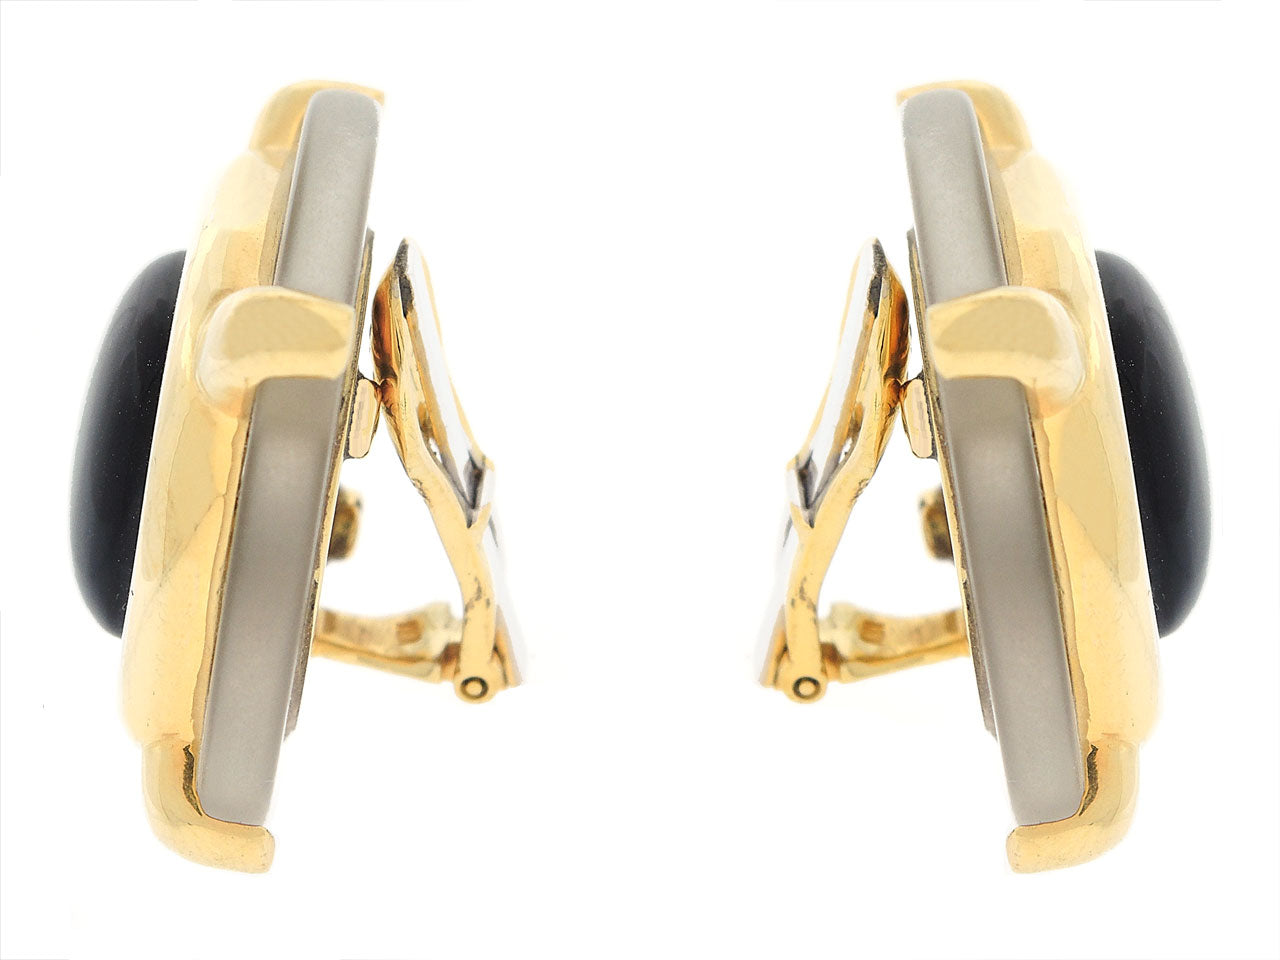 Cartier Aldo Cipullo Crystal and Onyx Earrings in 18K